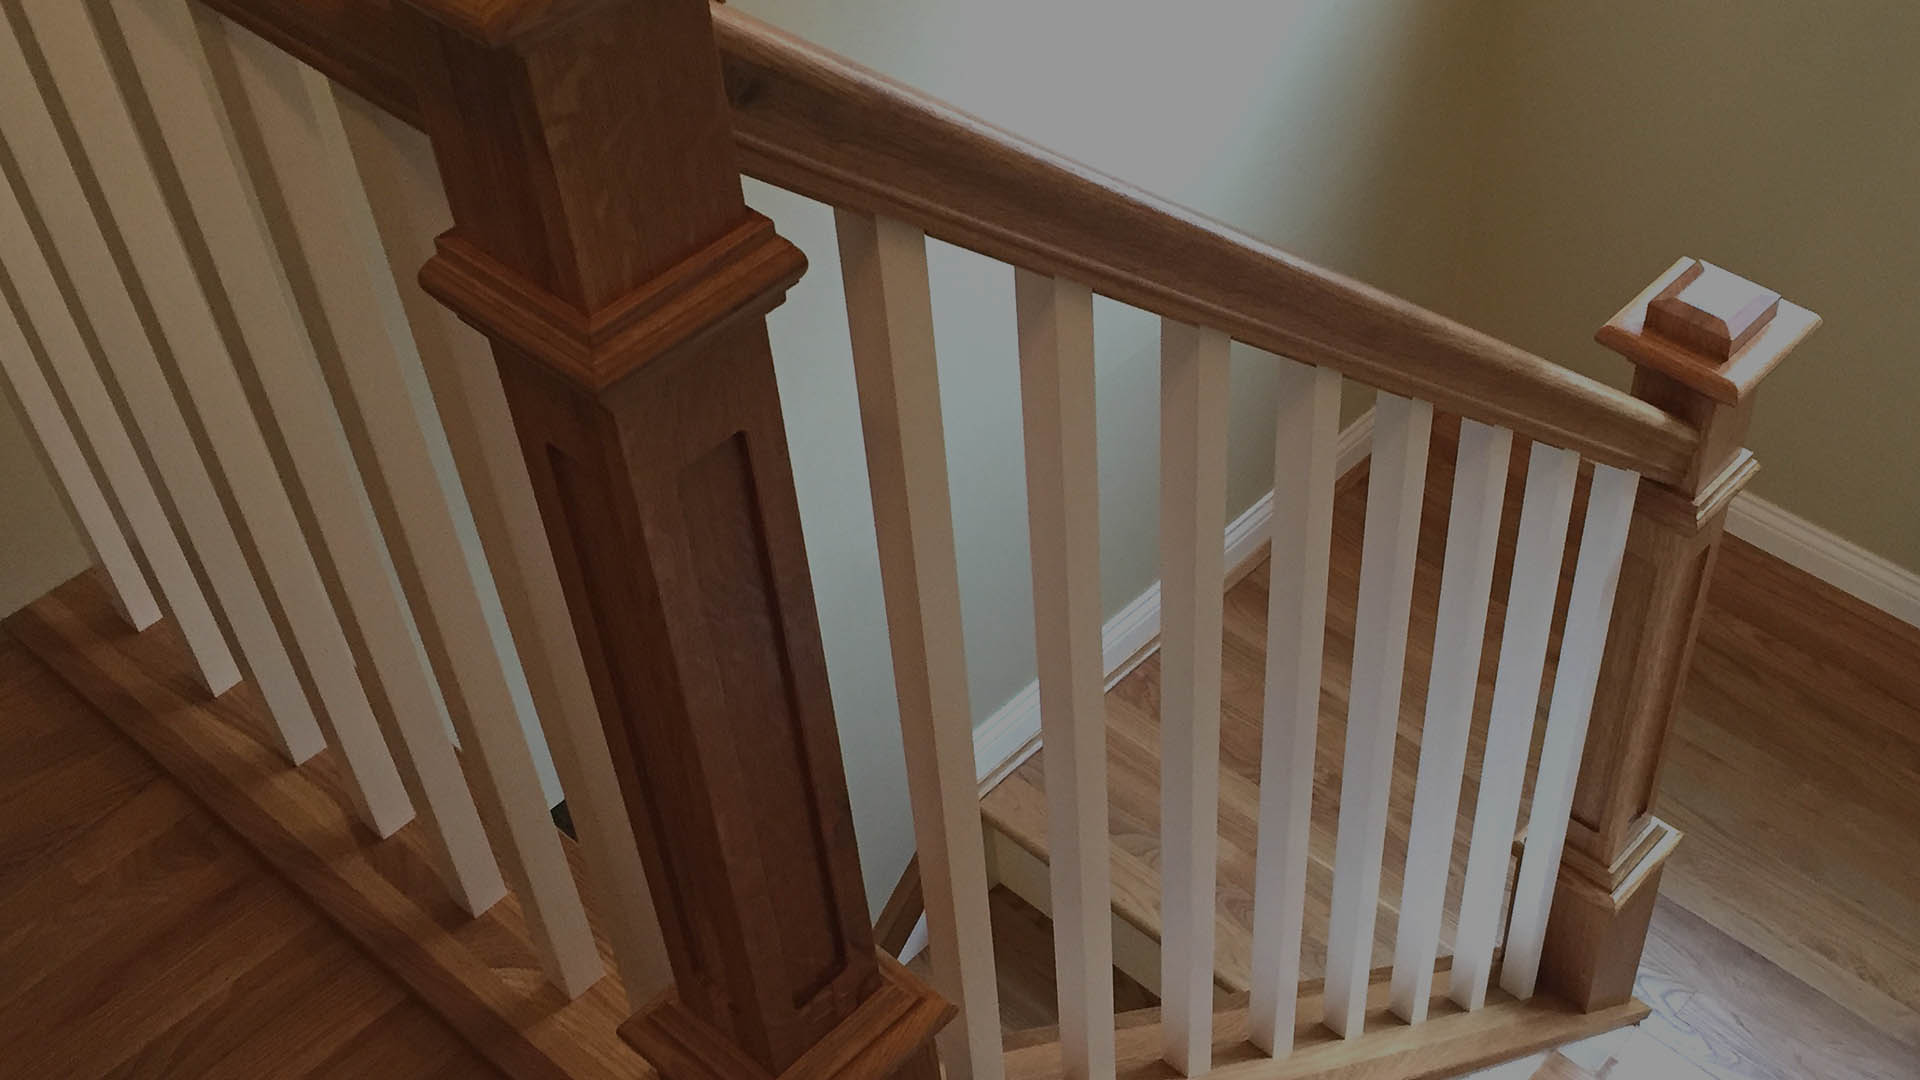 Handrail & Stairs Installation